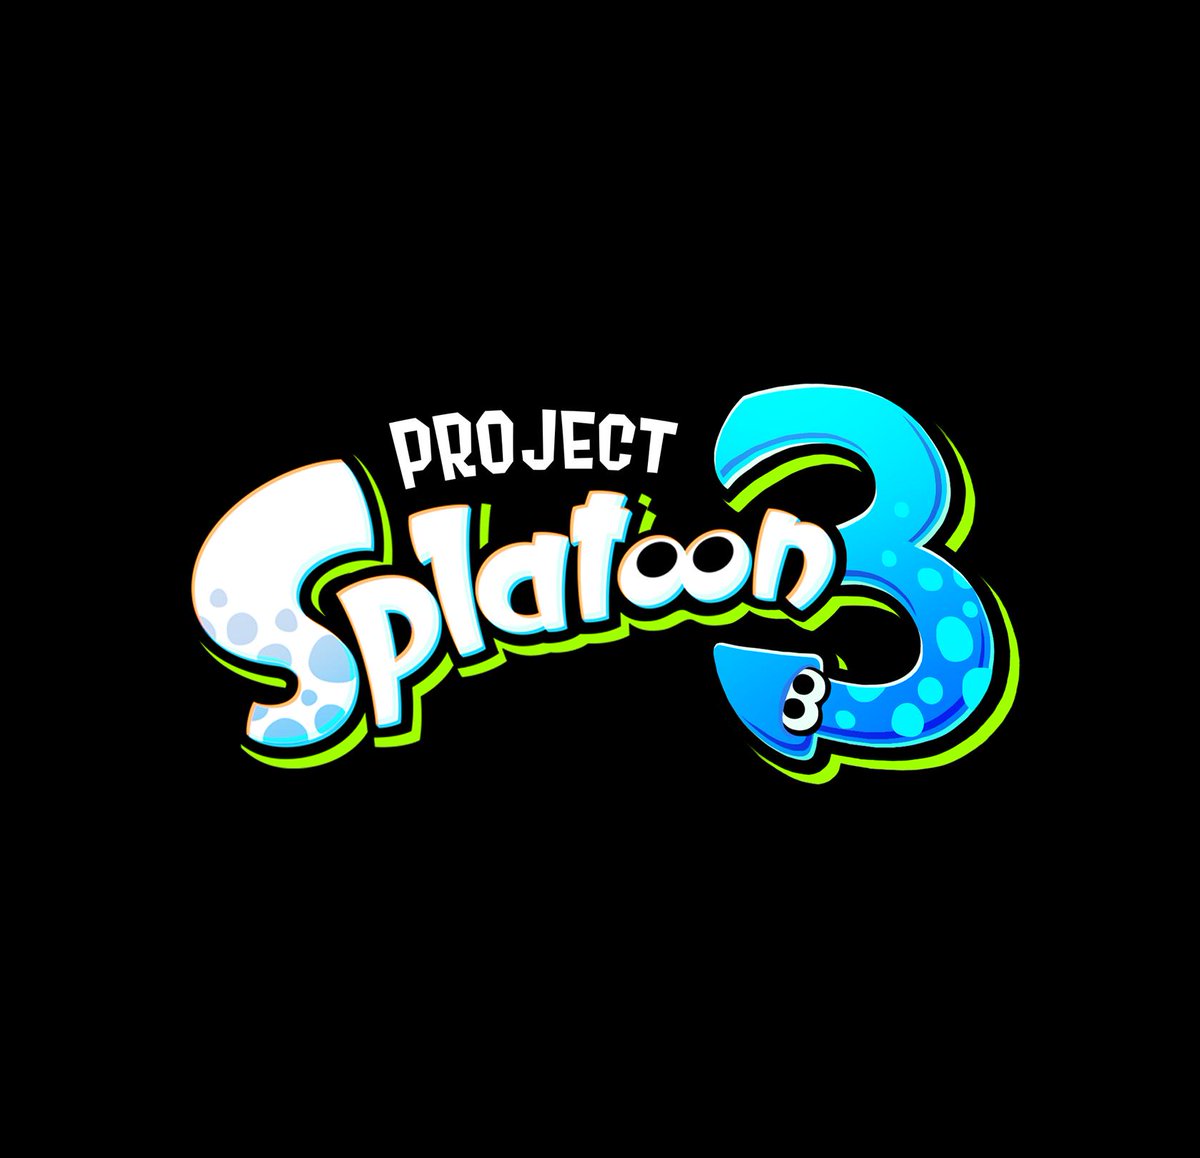 Project Splatoon 3